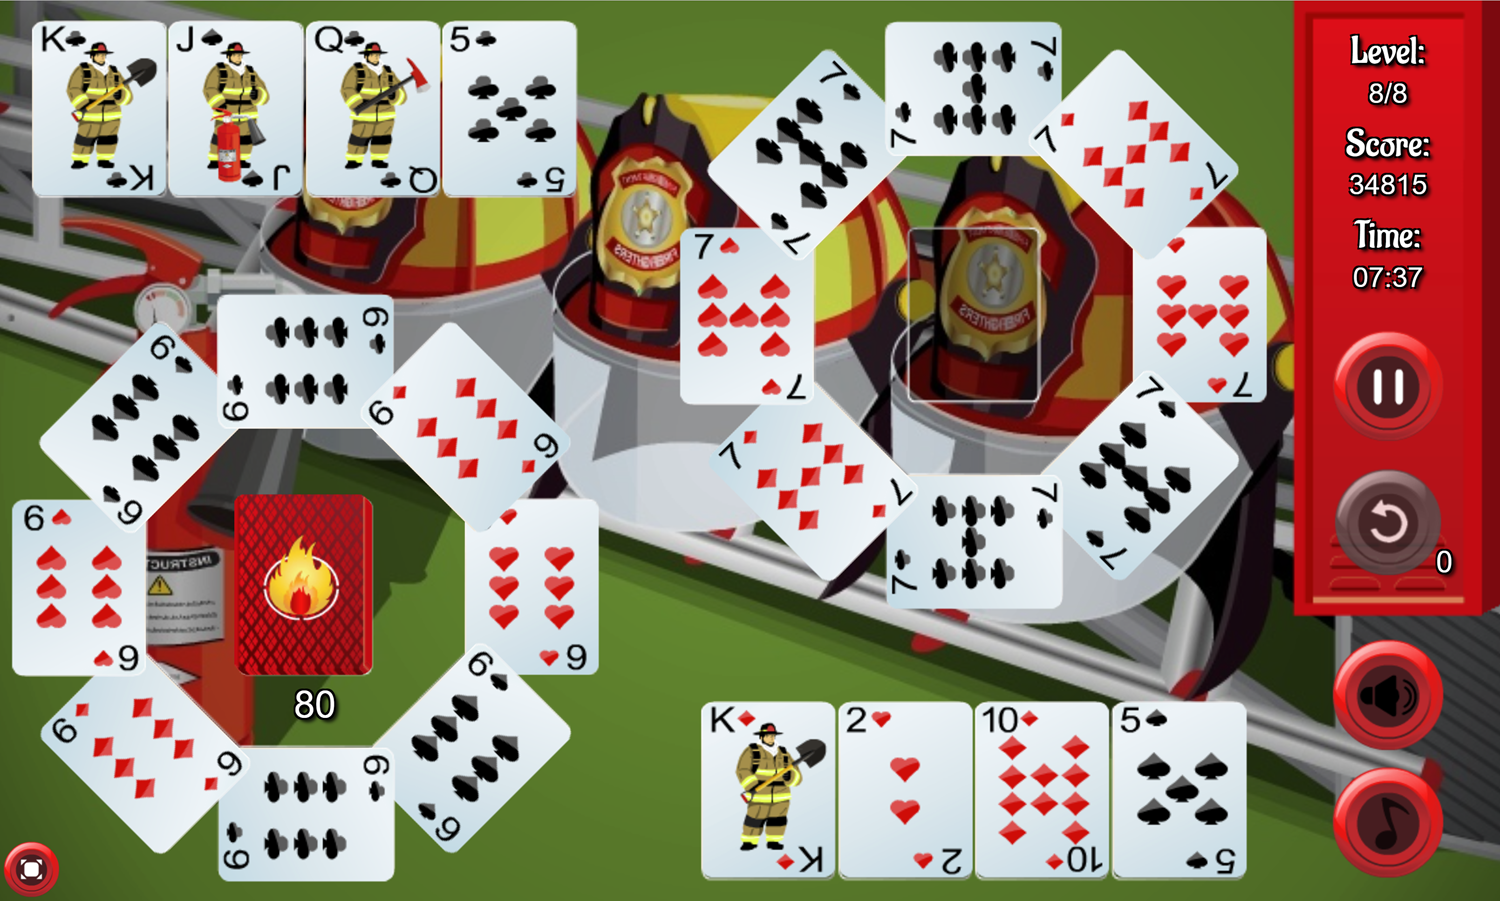 Firemen Solitaire Game Final Level Screenshot.